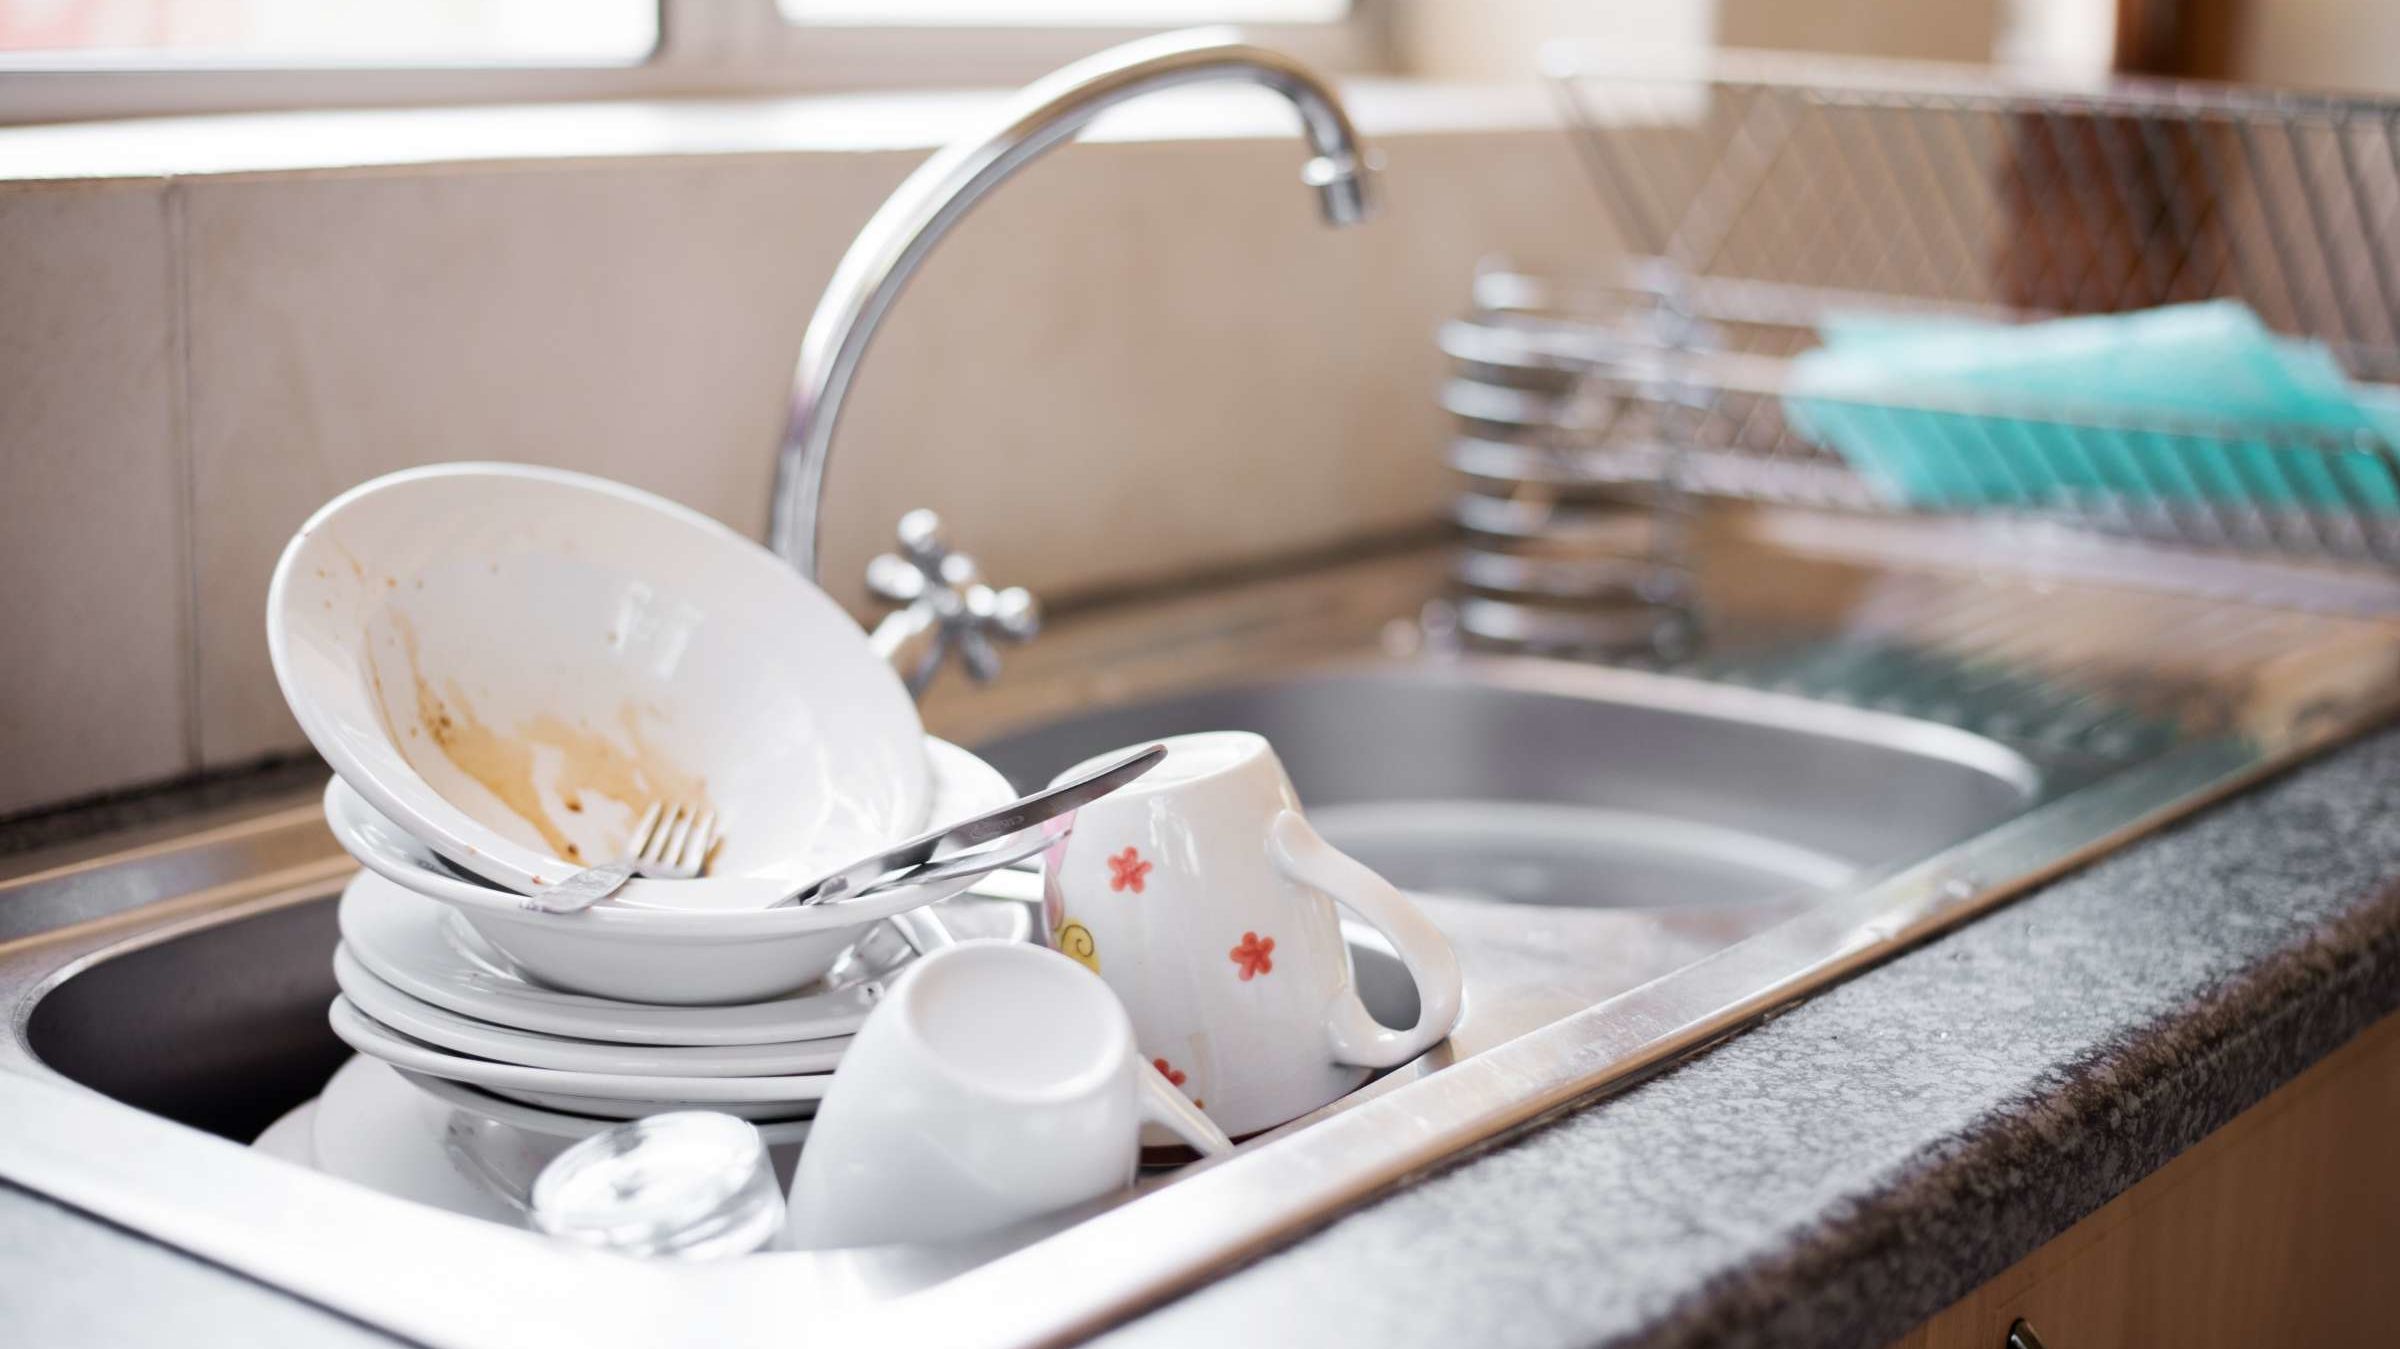 wash up kitchen sink instructions